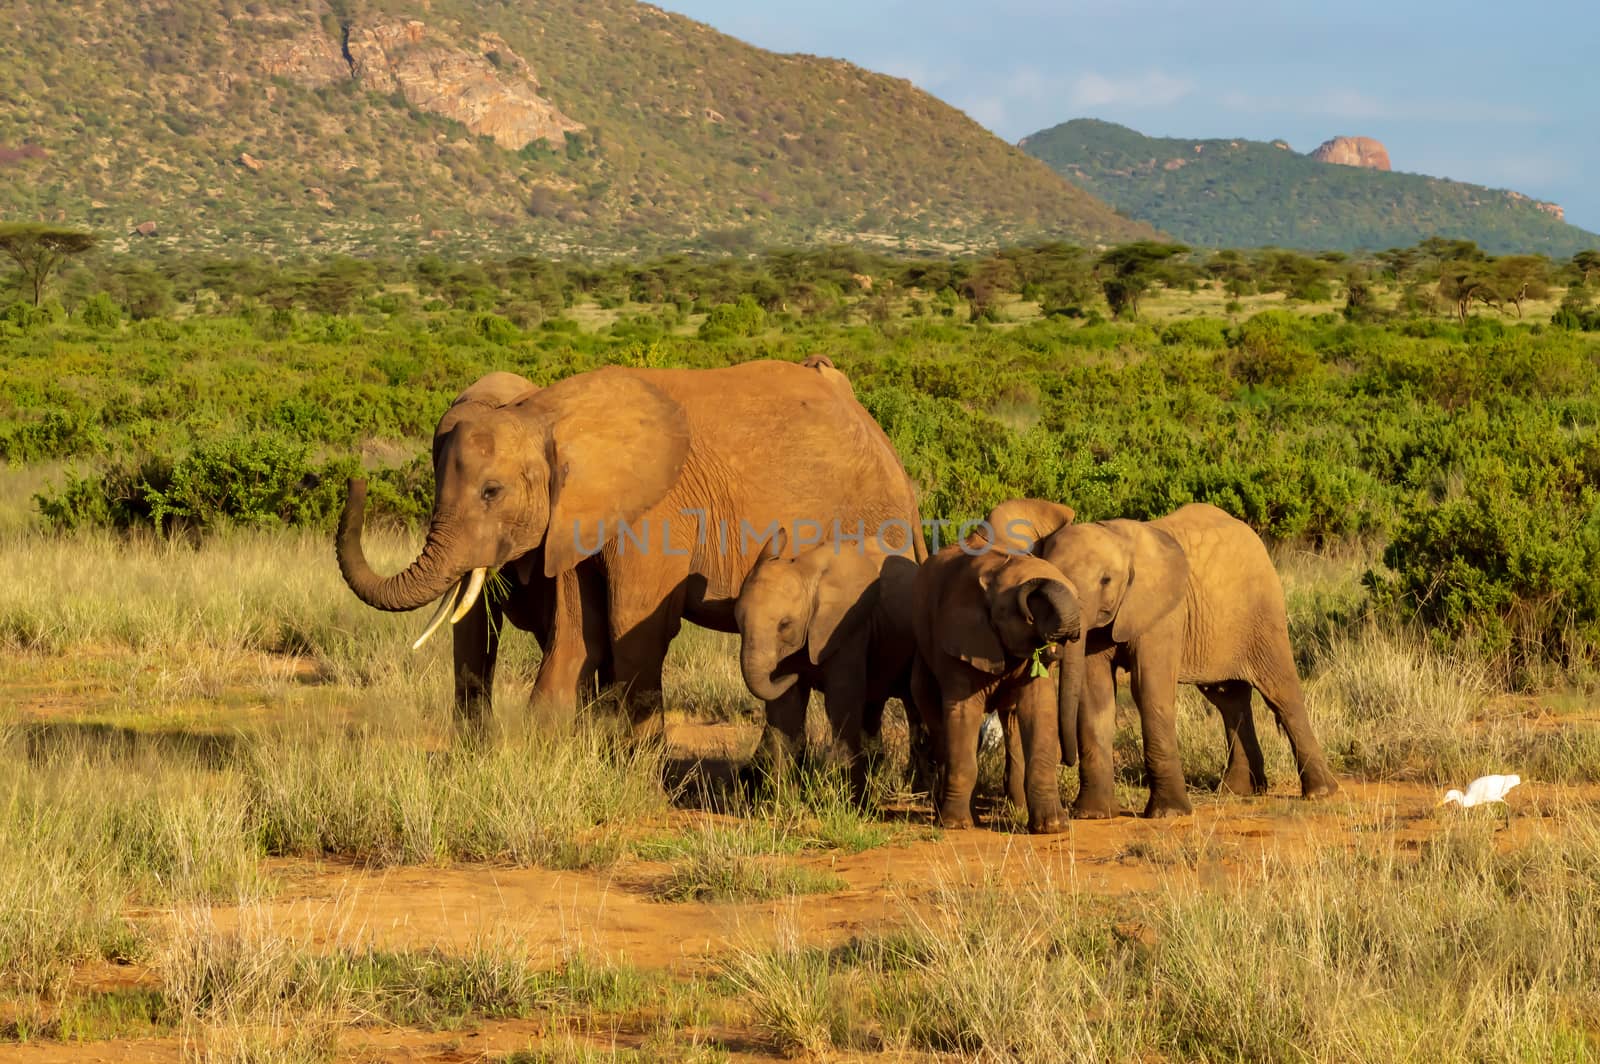 Elephant family in the savannah of Samburu Park in central Kenya